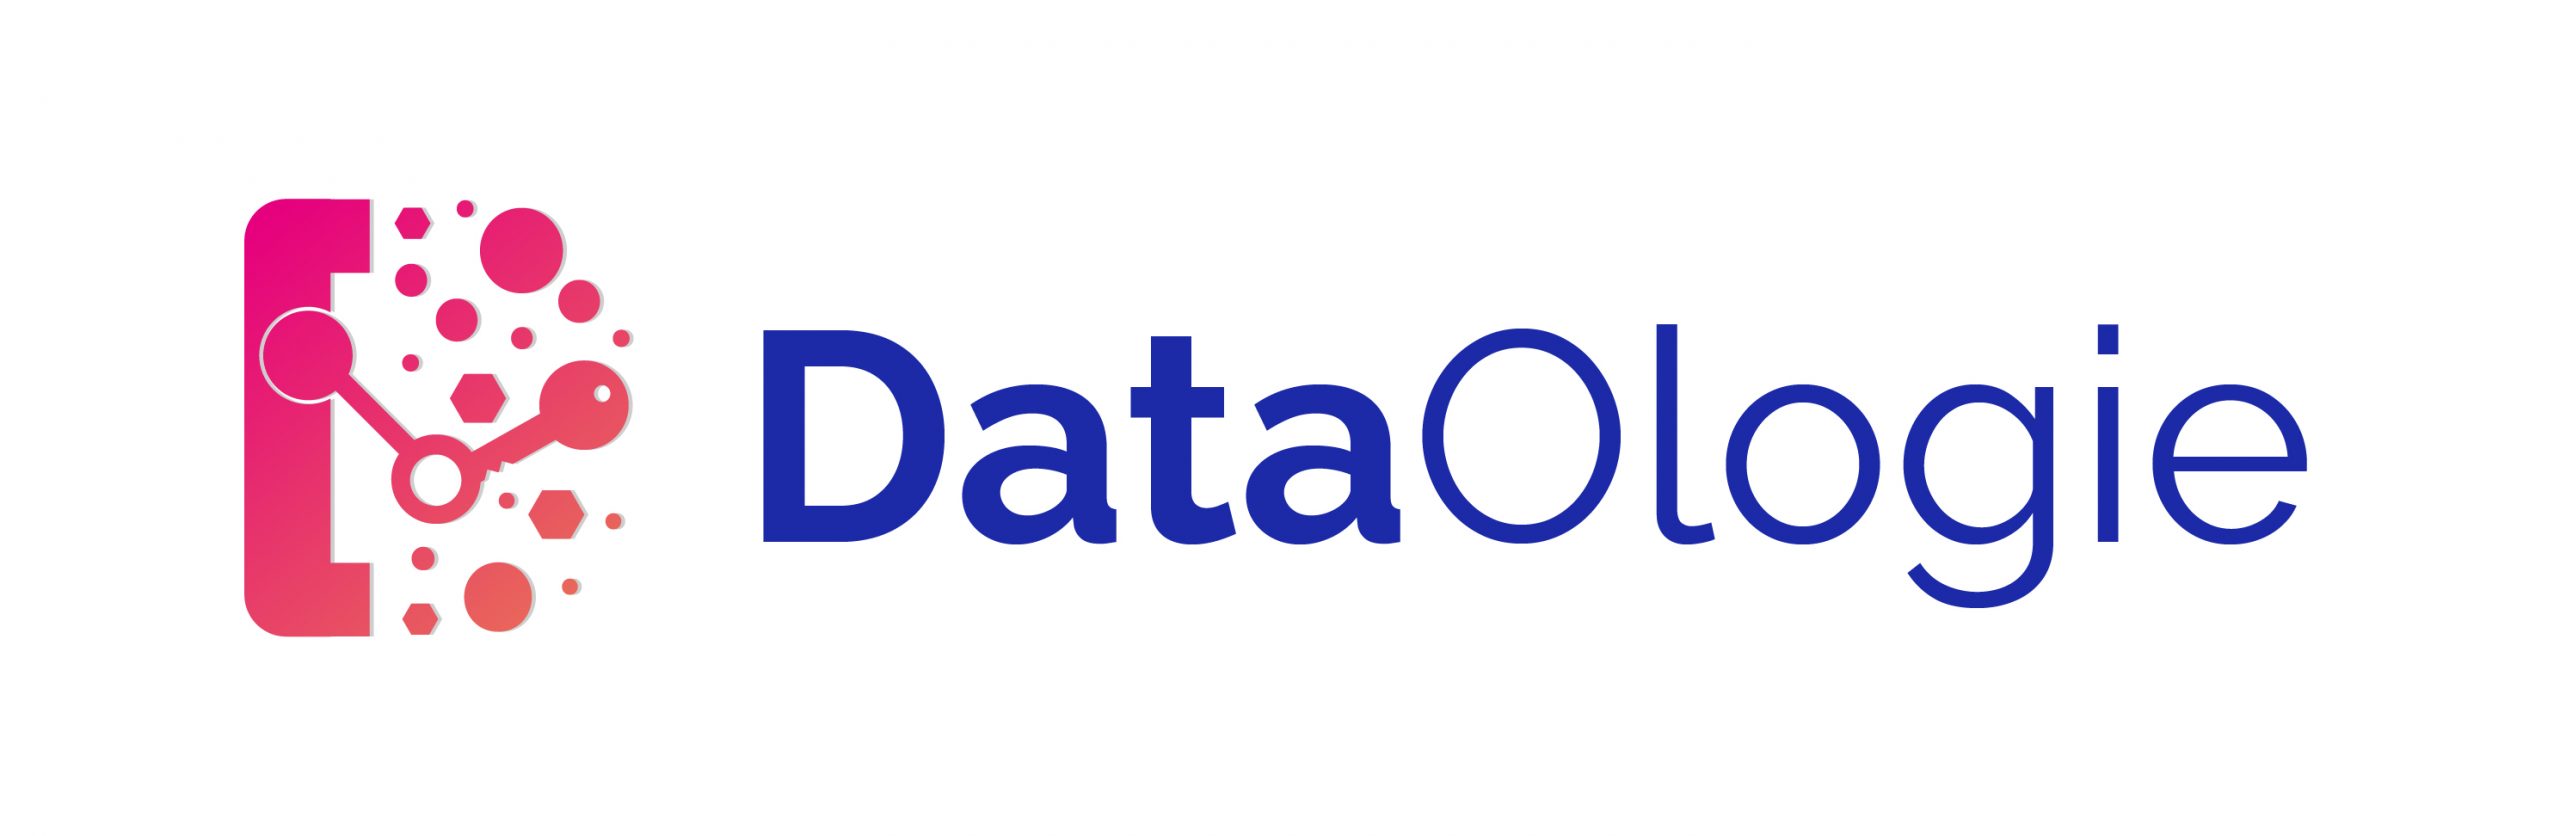 Dataologie Logo